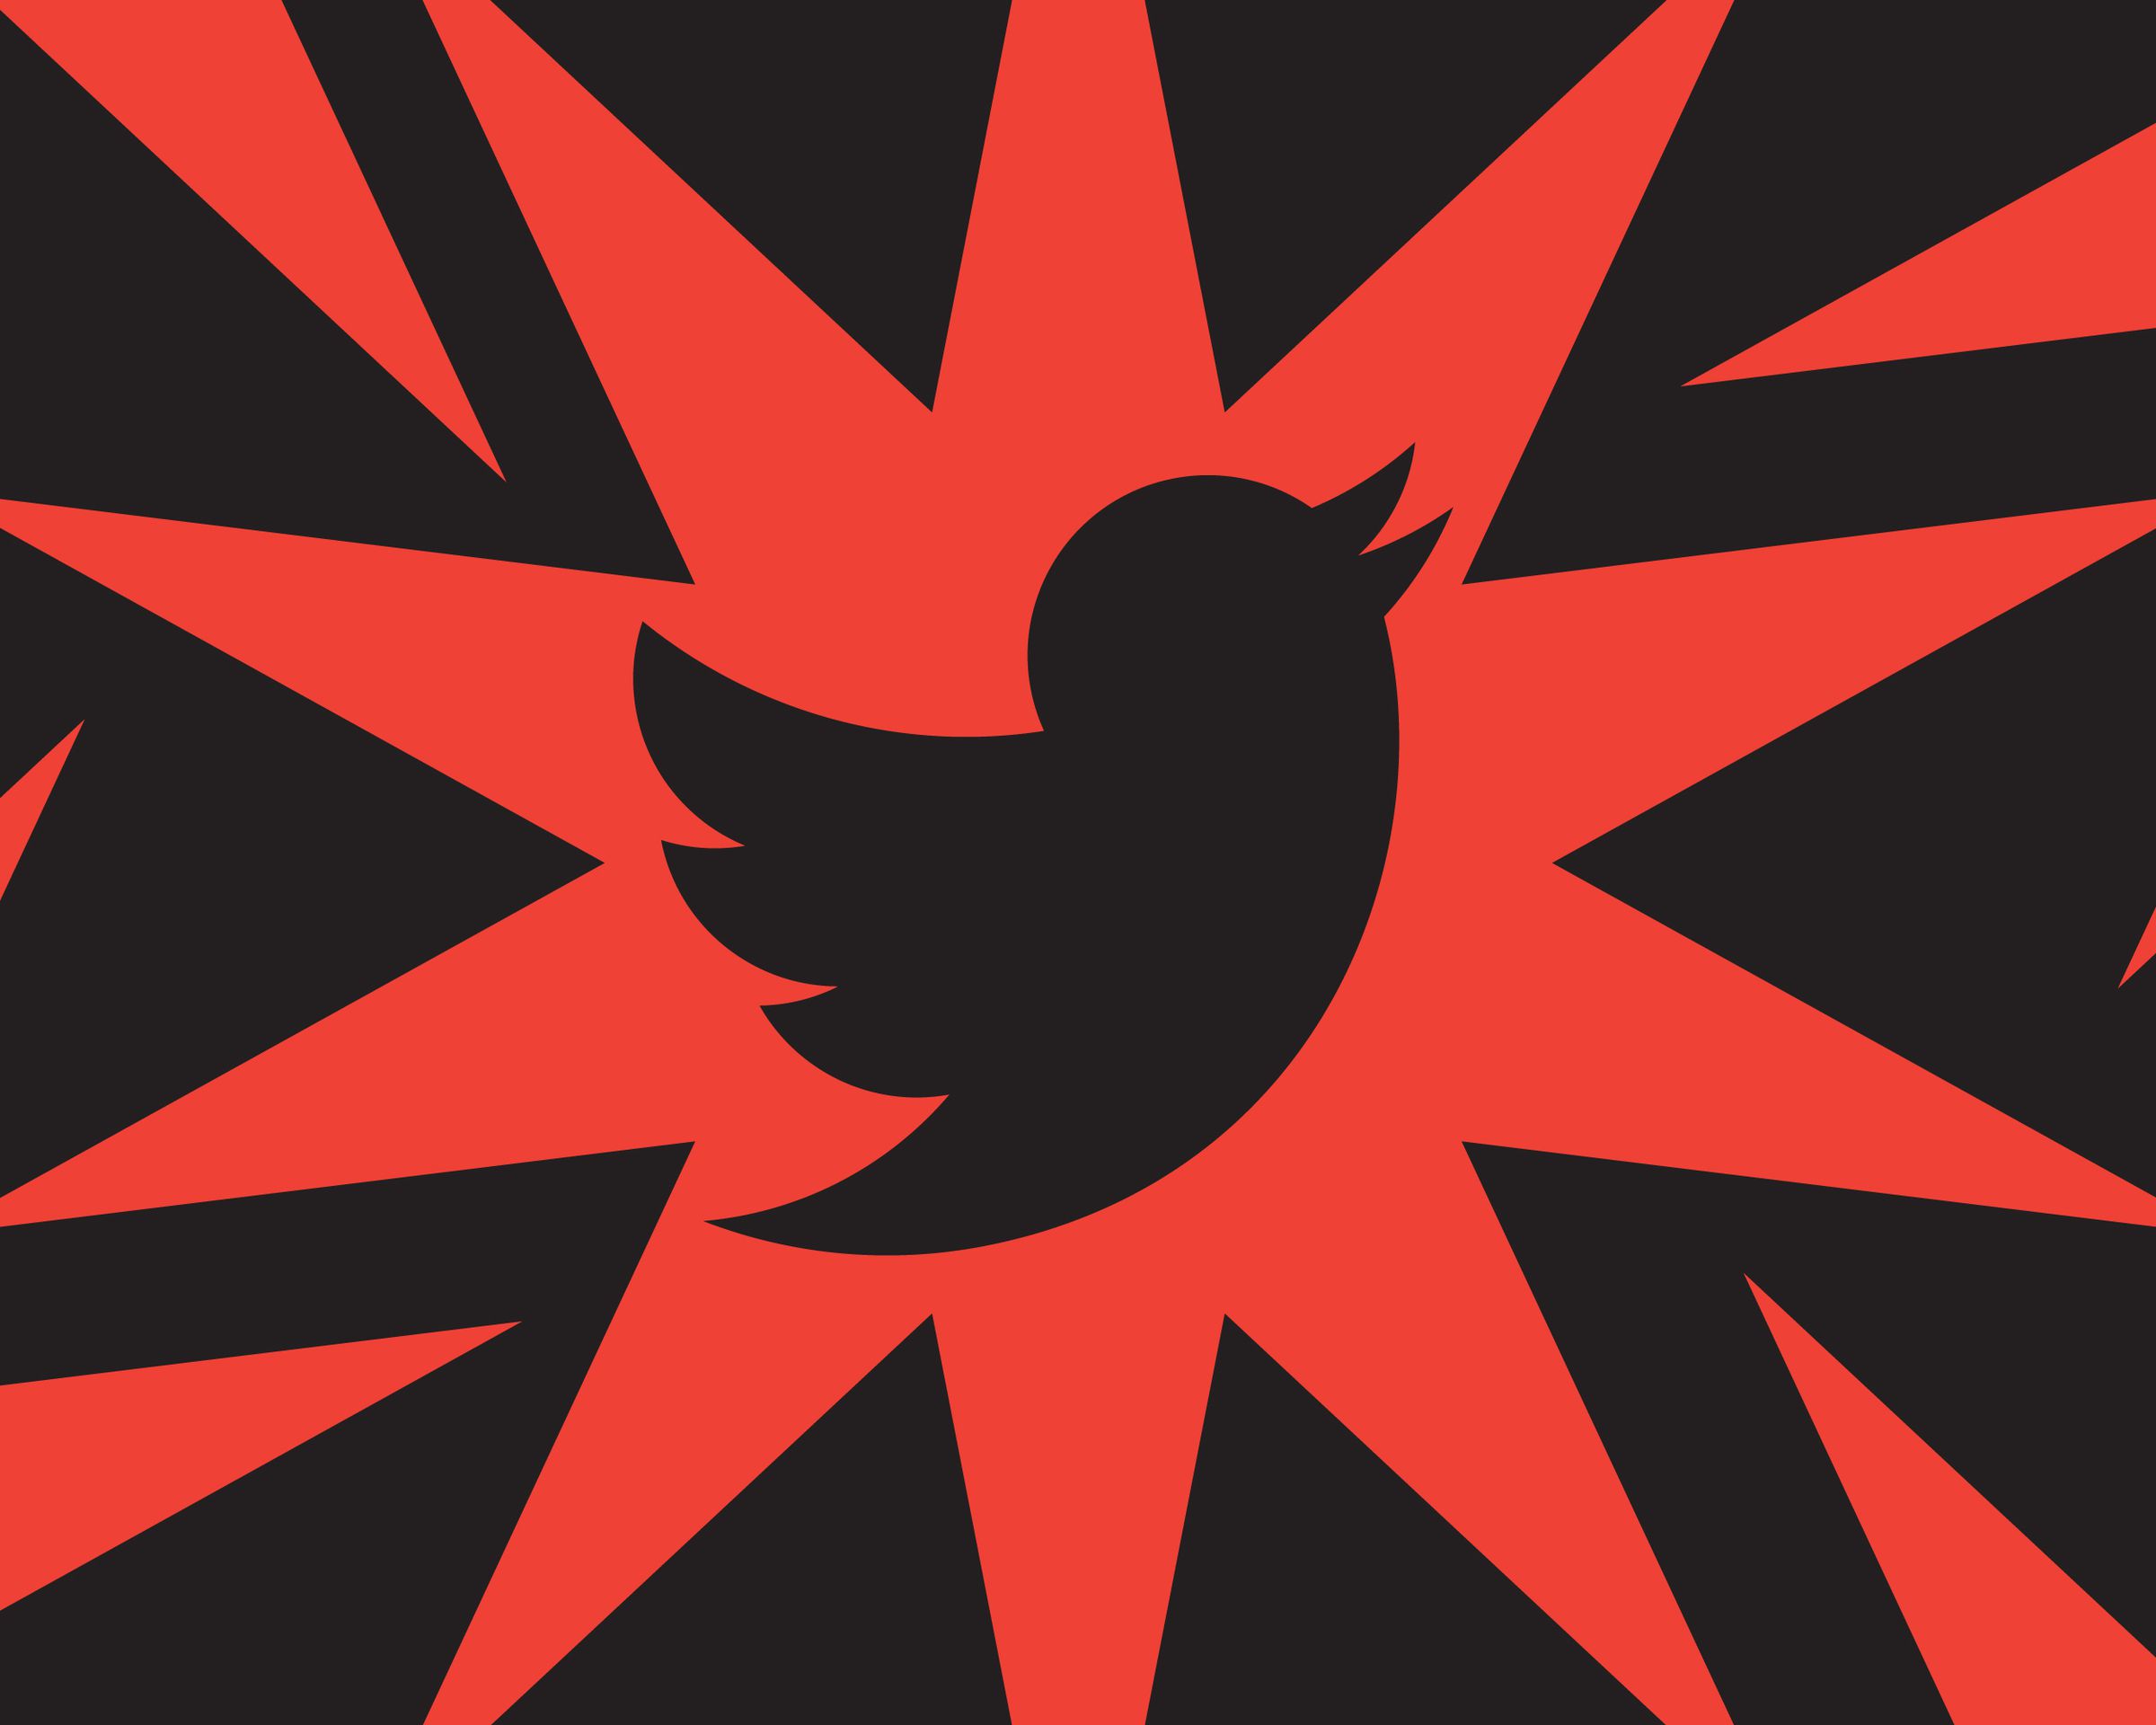 A black Twitter logo over a red illustration